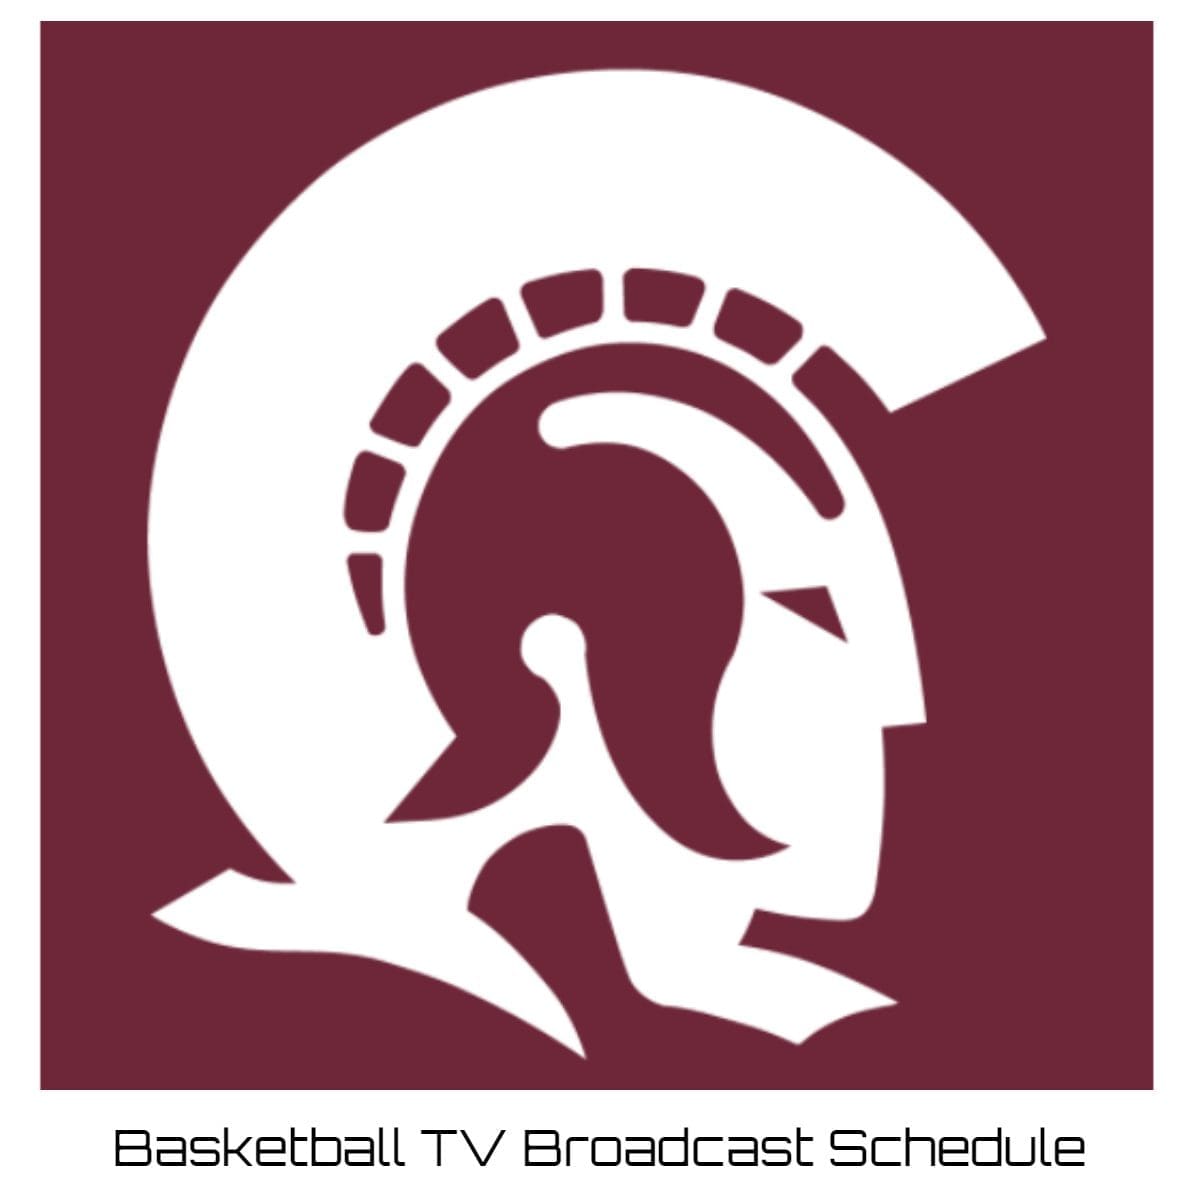 Little Rock Trojans Basketball TV Broadcast Schedule